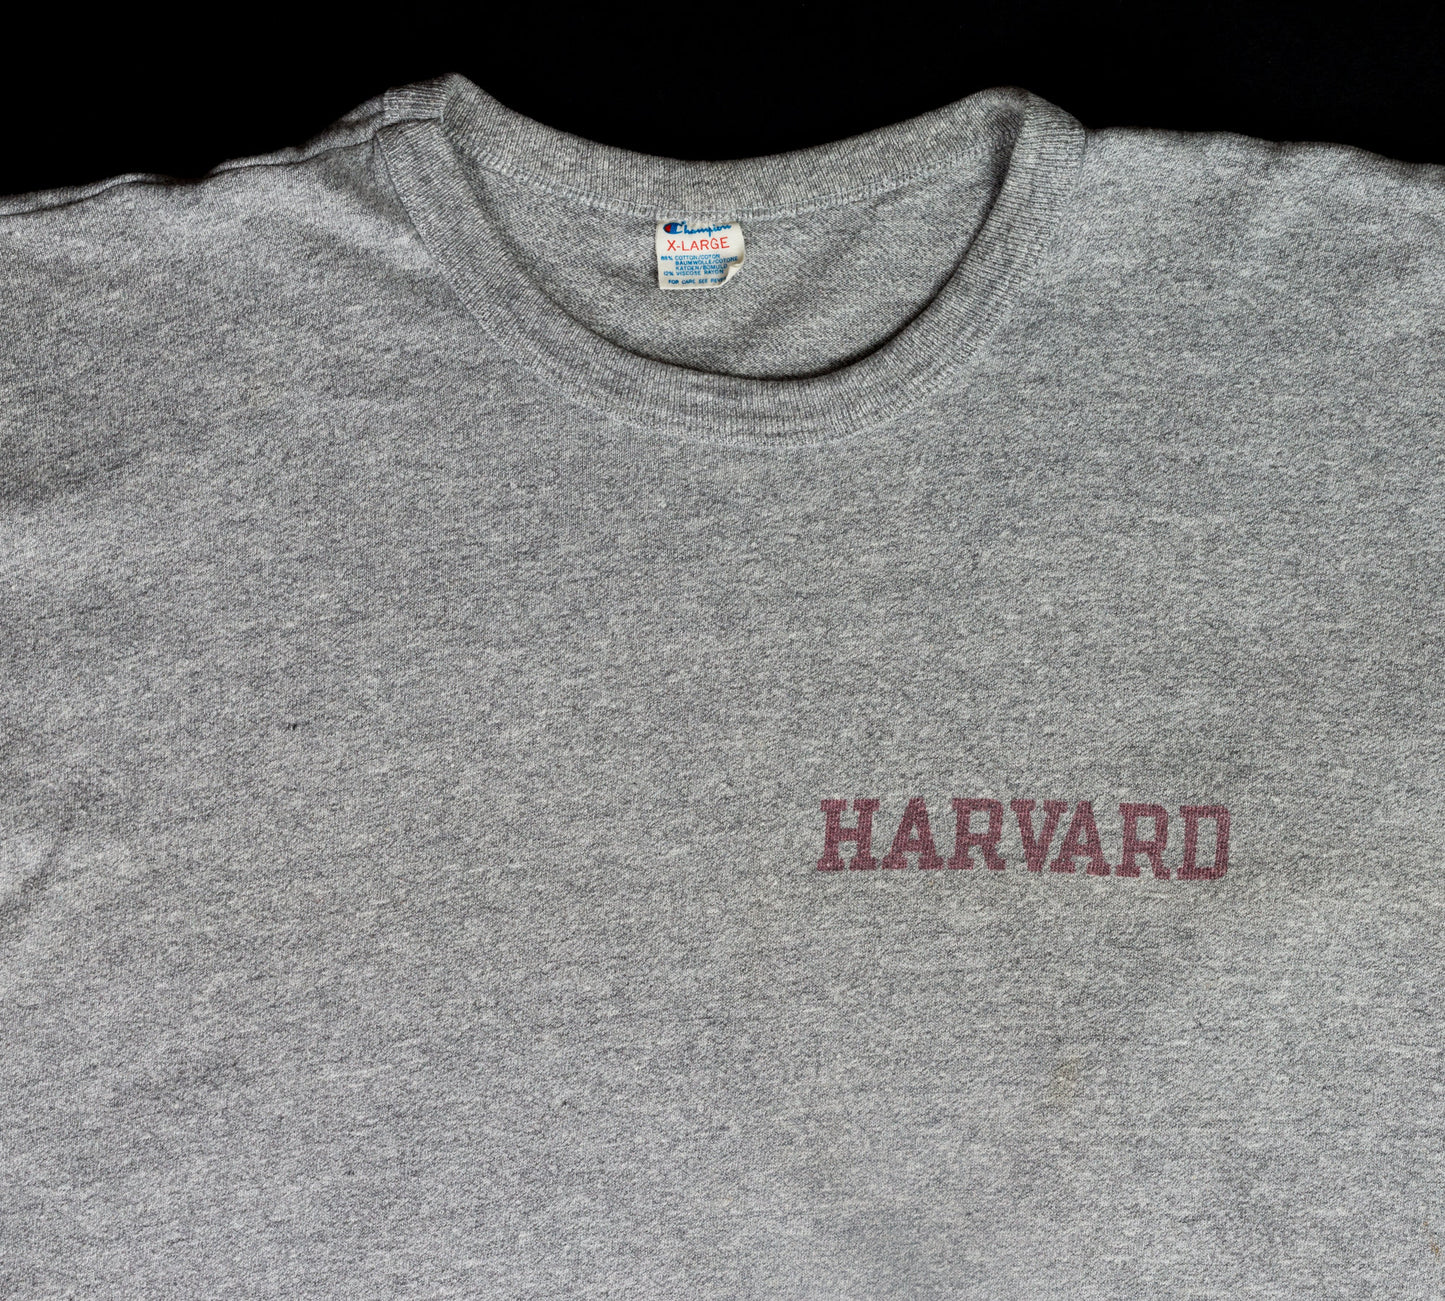 80s Harvard University Champion T Shirt - Extra Large 